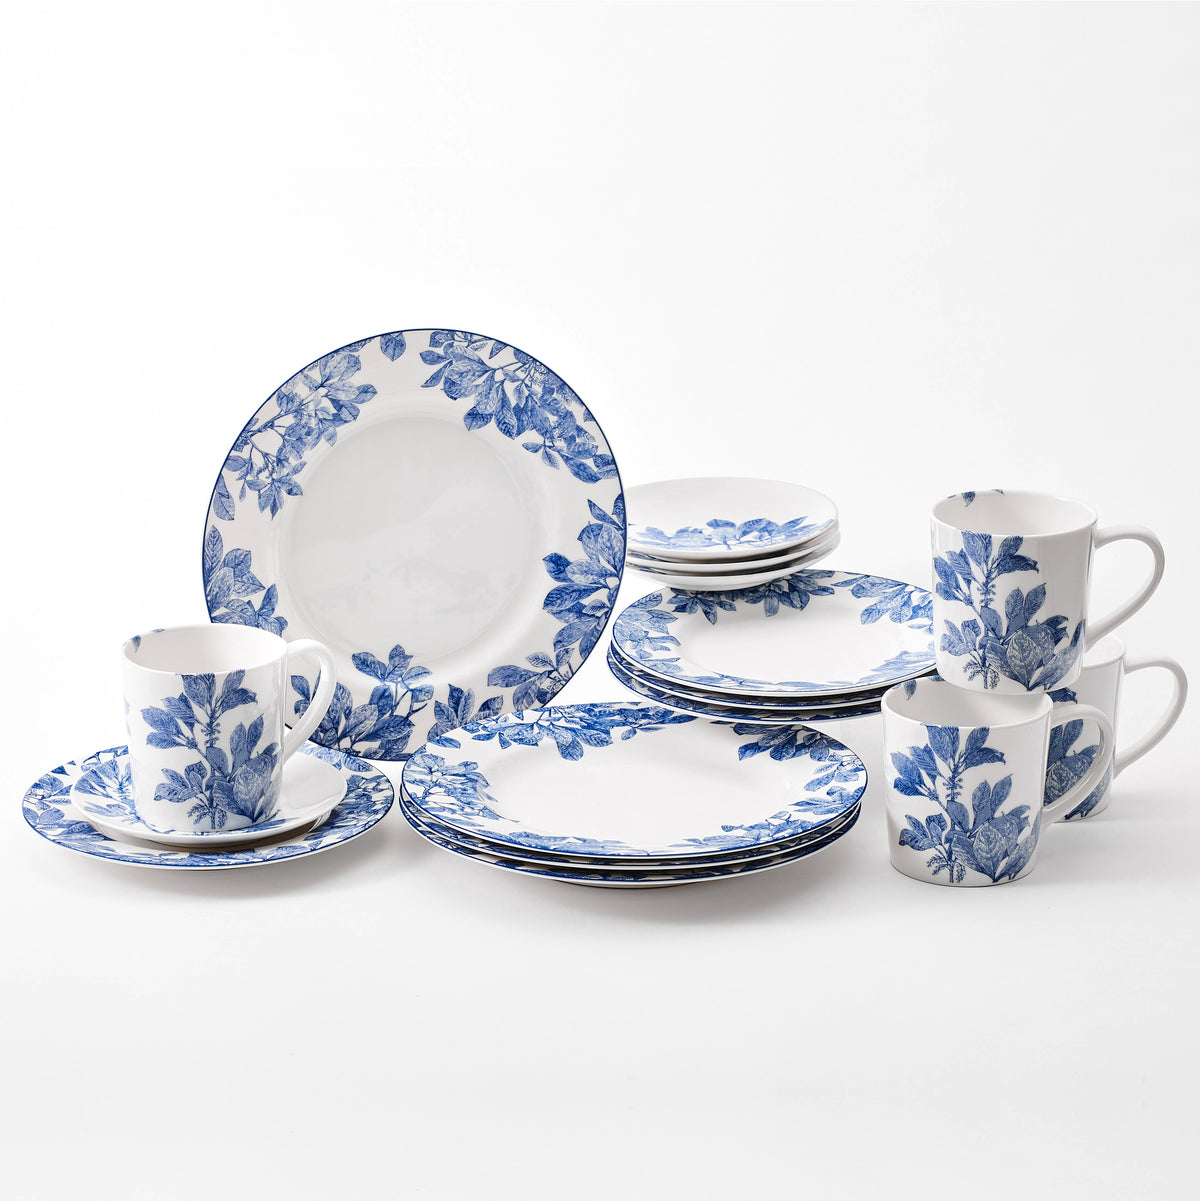 Arbor pattern blue and white porcelain 16 piece dinnerware set from Caskata